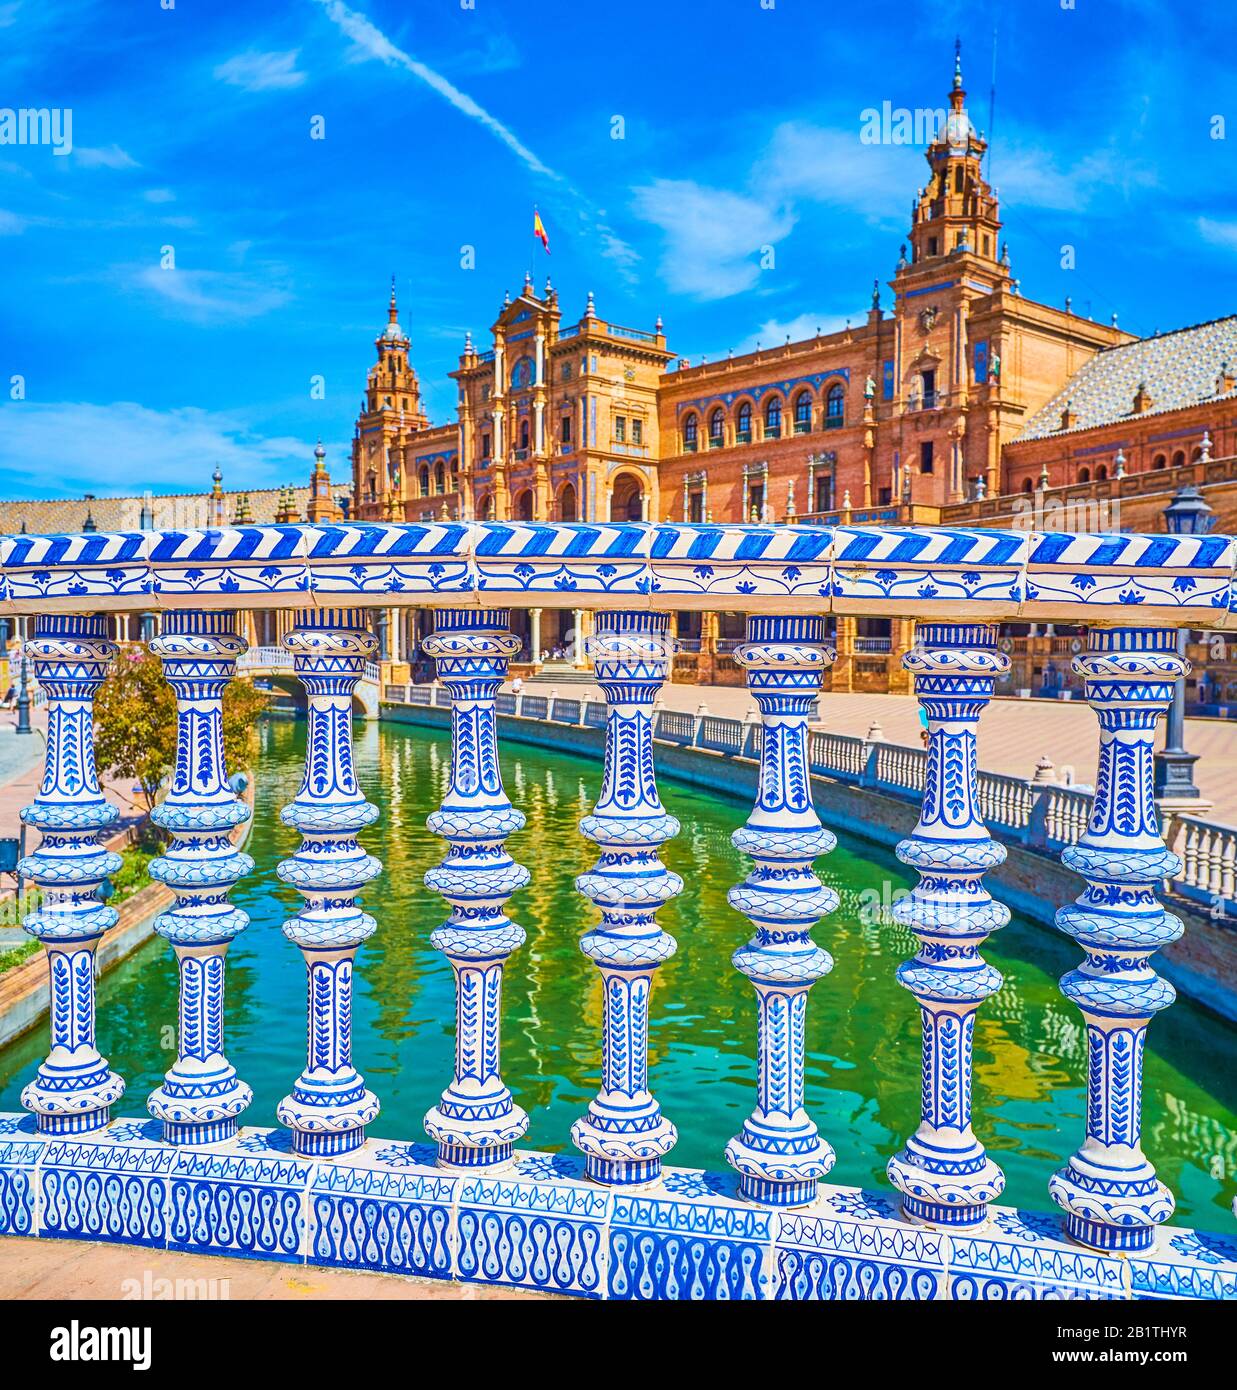 Plaza de Espana boasts beautiful ceramic decorations in Andalusian style, Seville, Spain Stock Photo